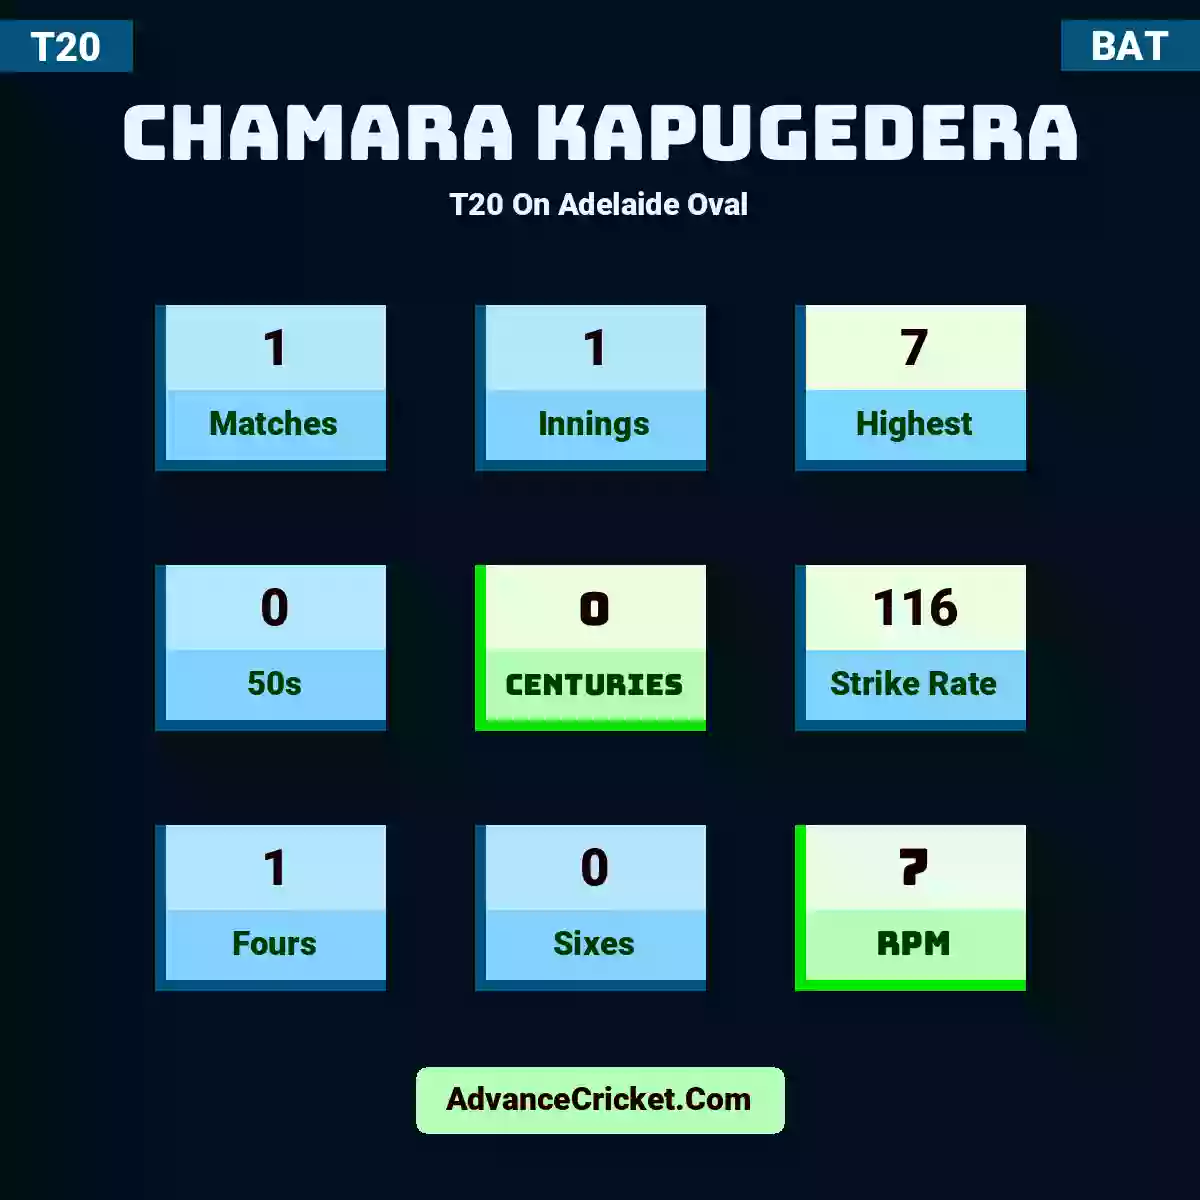 Chamara Kapugedera T20  On Adelaide Oval, Chamara Kapugedera played 1 matches, scored 7 runs as highest, 0 half-centuries, and 0 centuries, with a strike rate of 116. C.Kapugedera hit 1 fours and 0 sixes, with an RPM of 7.